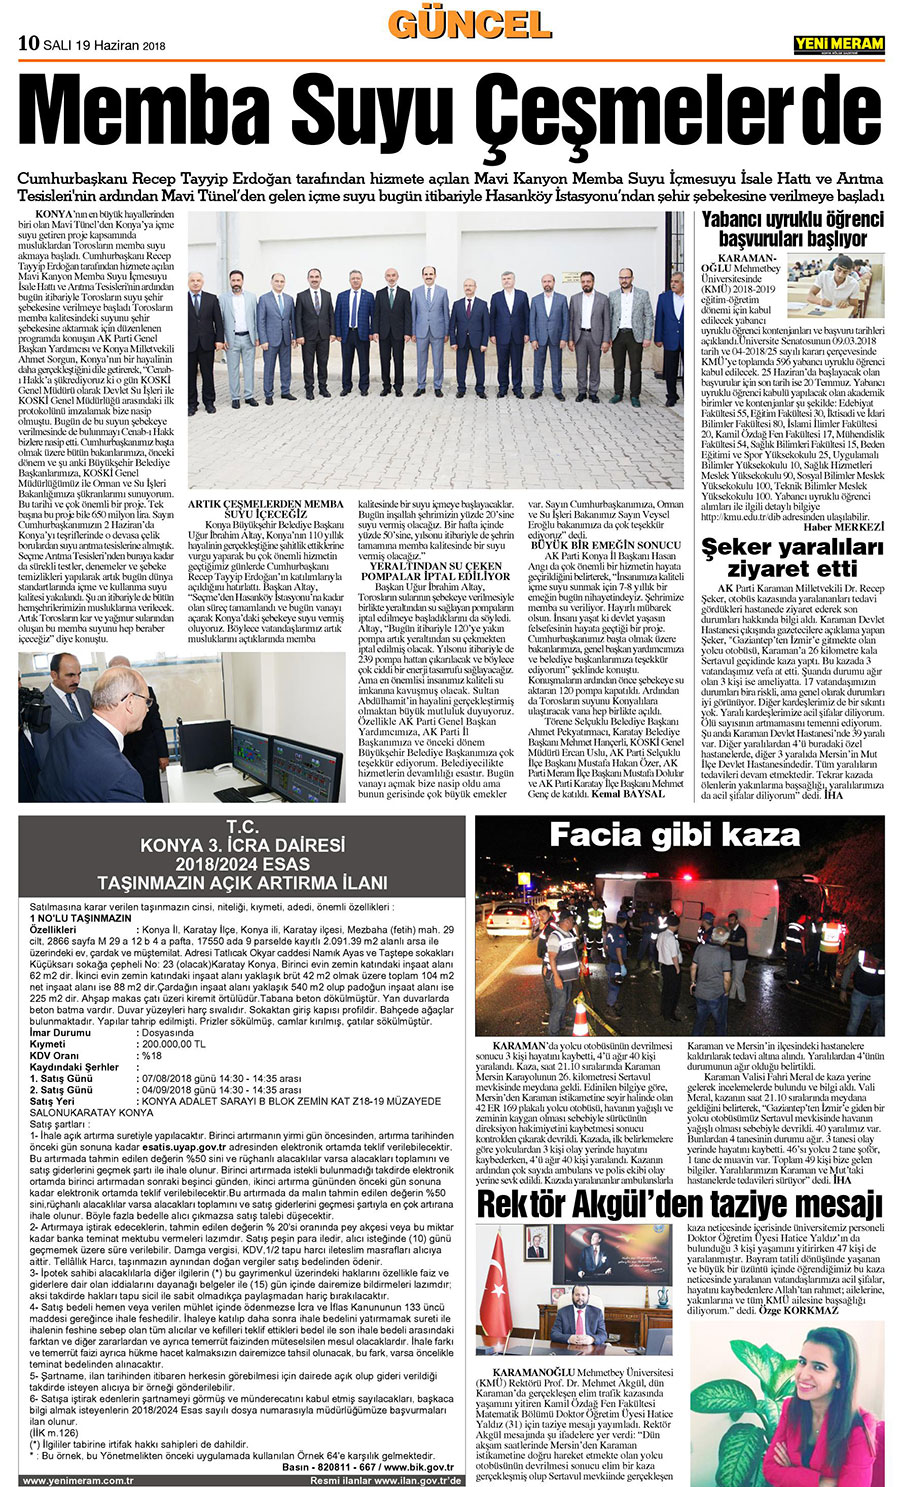 19 Haziran 2018 Yeni Meram Gazetesi